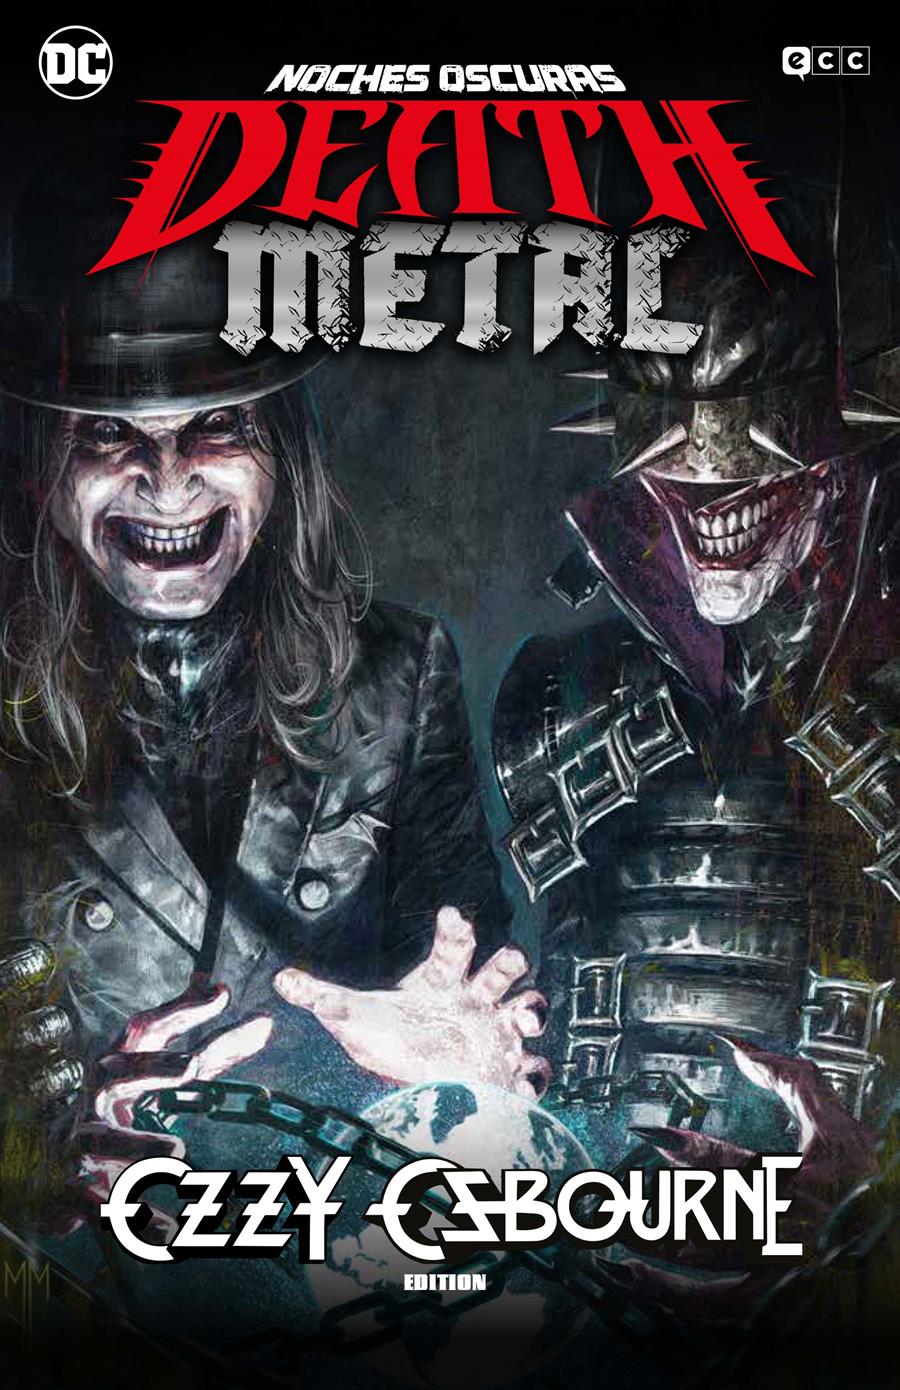 Noches oscuras: Death Metal núm. 7 (Ozzy Osbourne Band Edition) (Rústica) | N0821-ECC22 | Greg Capullo / Scott Snyder | Terra de Còmic - Tu tienda de cómics online especializada en cómics, manga y merchandising